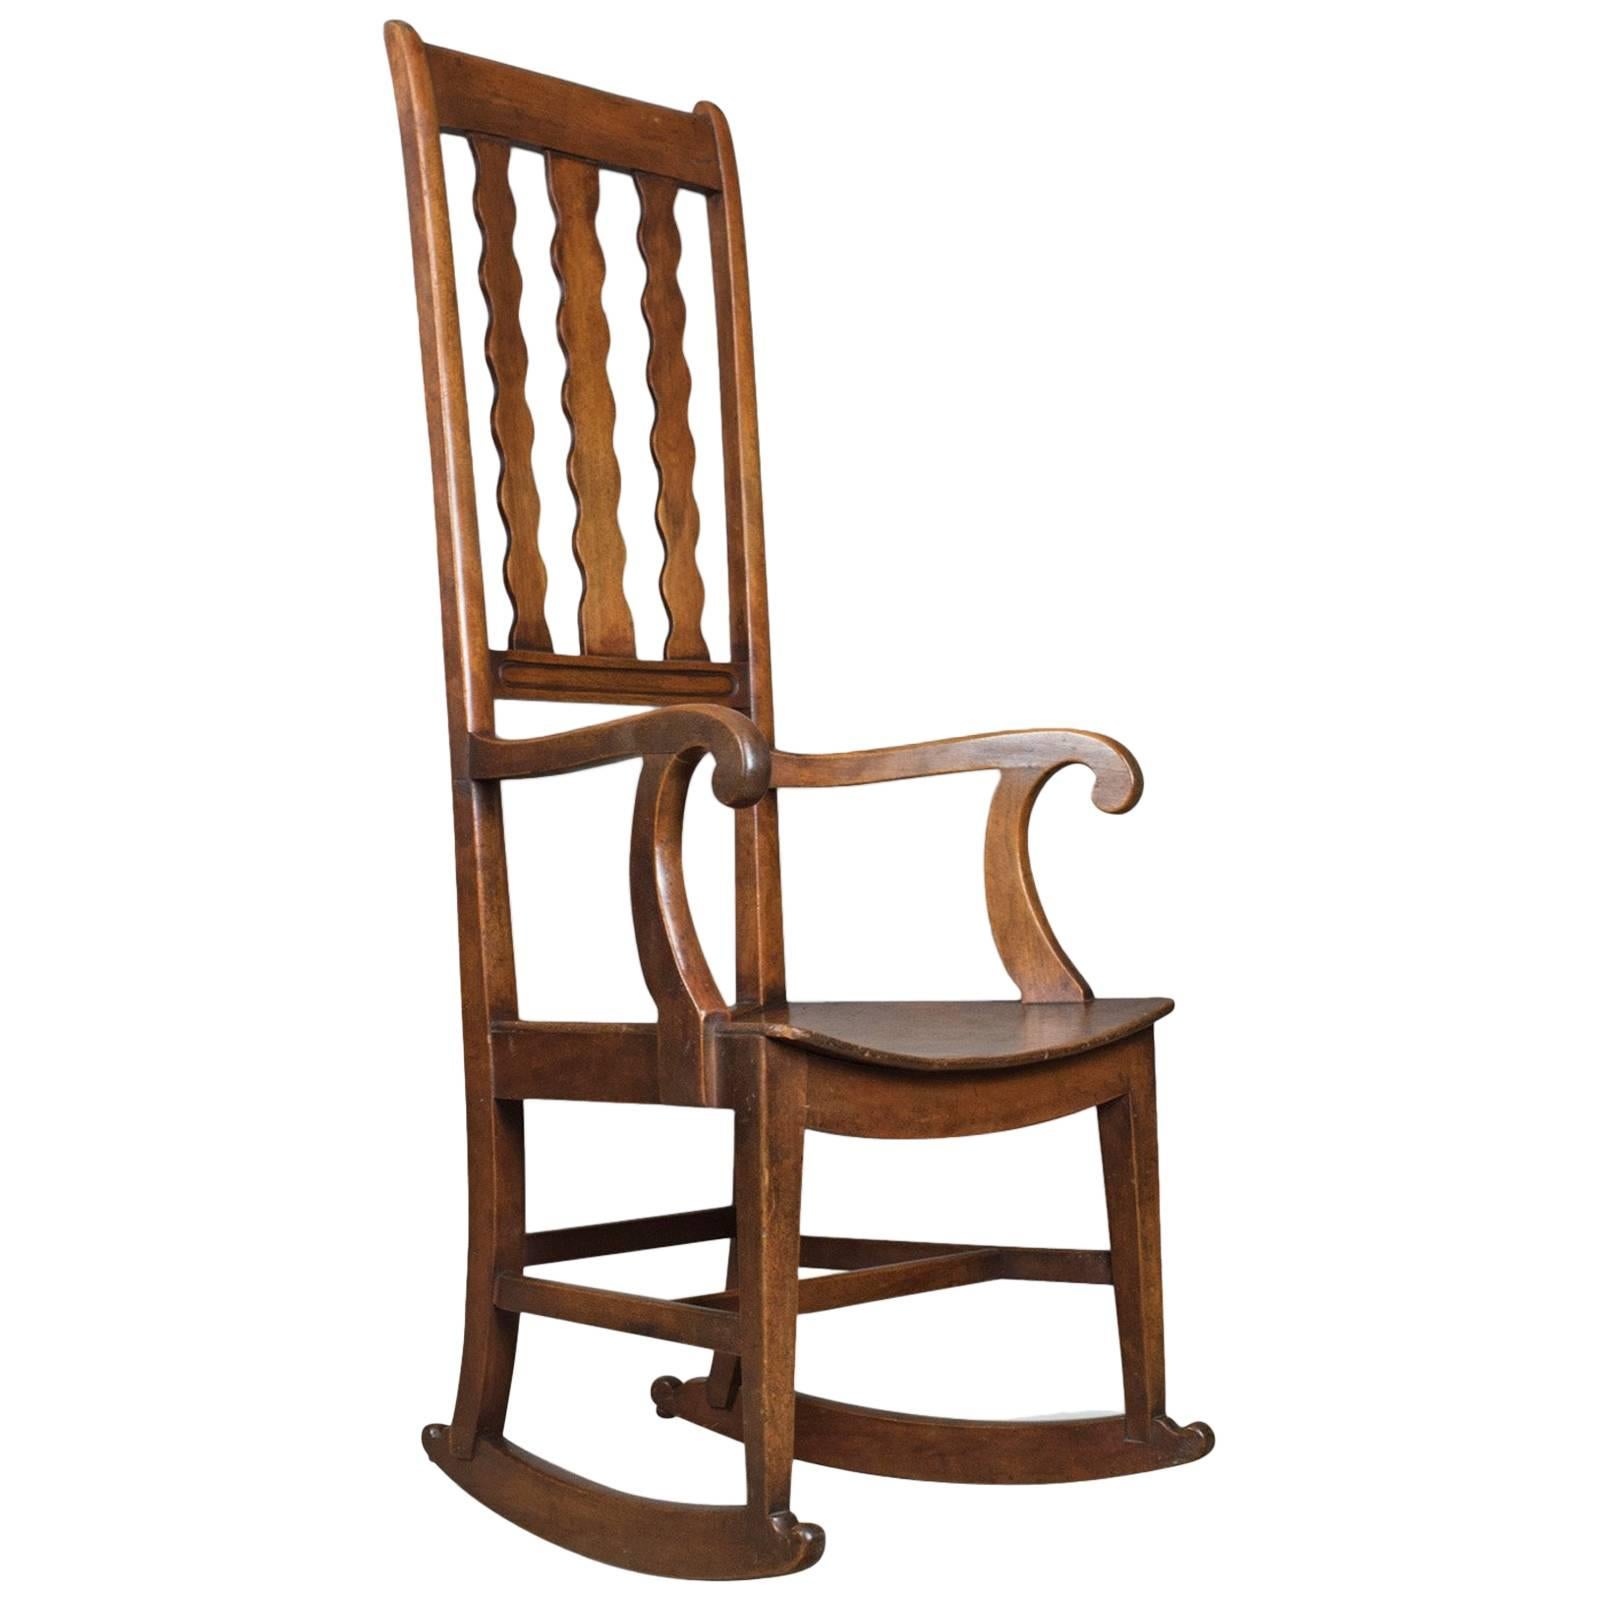 Antique Rocking Chair English Victorian, Mahogany Wavy Line Rocker, circa 1850